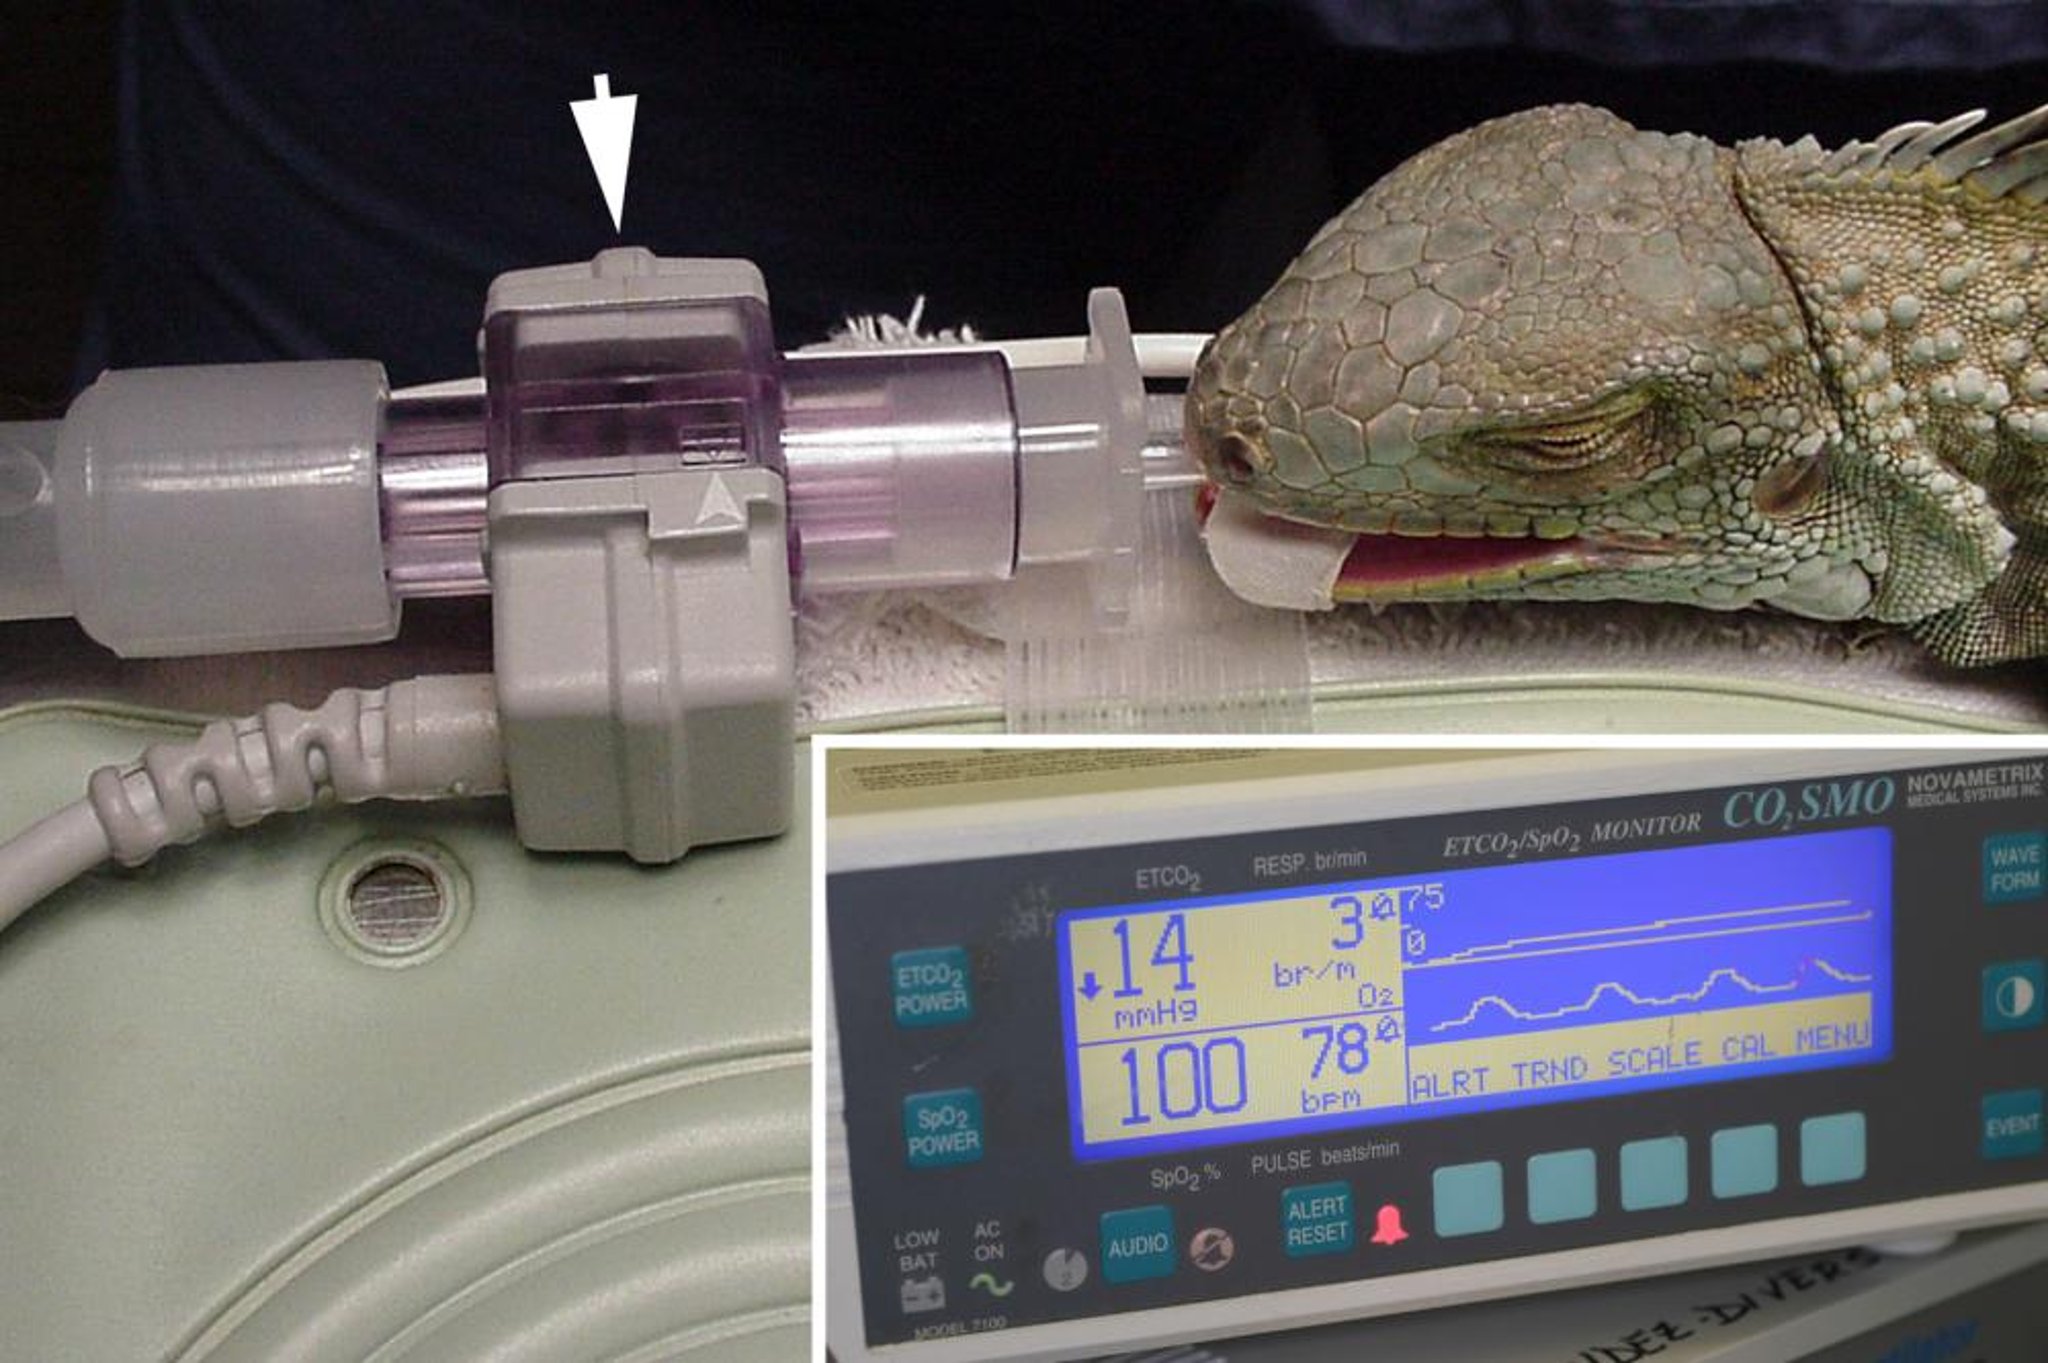 Anesthesia monitoring, lizard